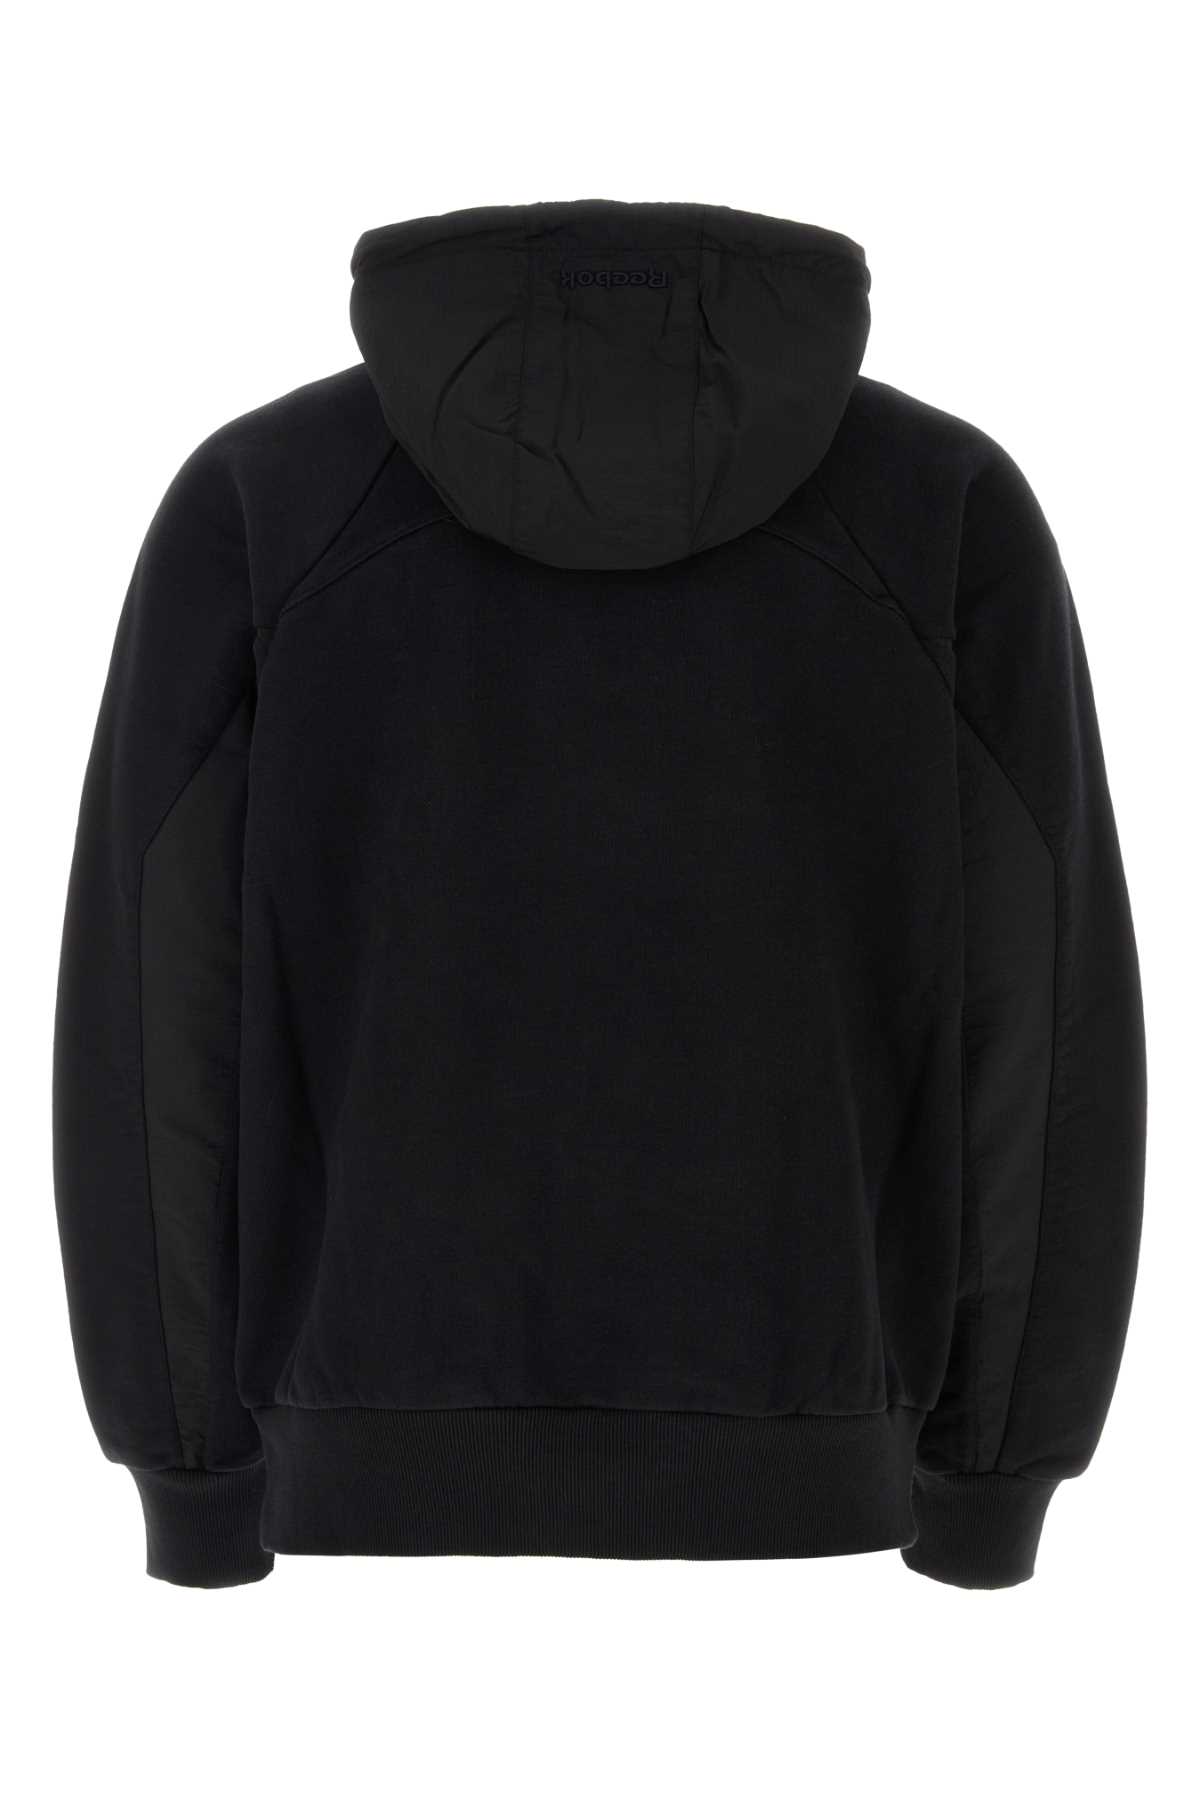 Reebok Black Cotton Sweatshirt